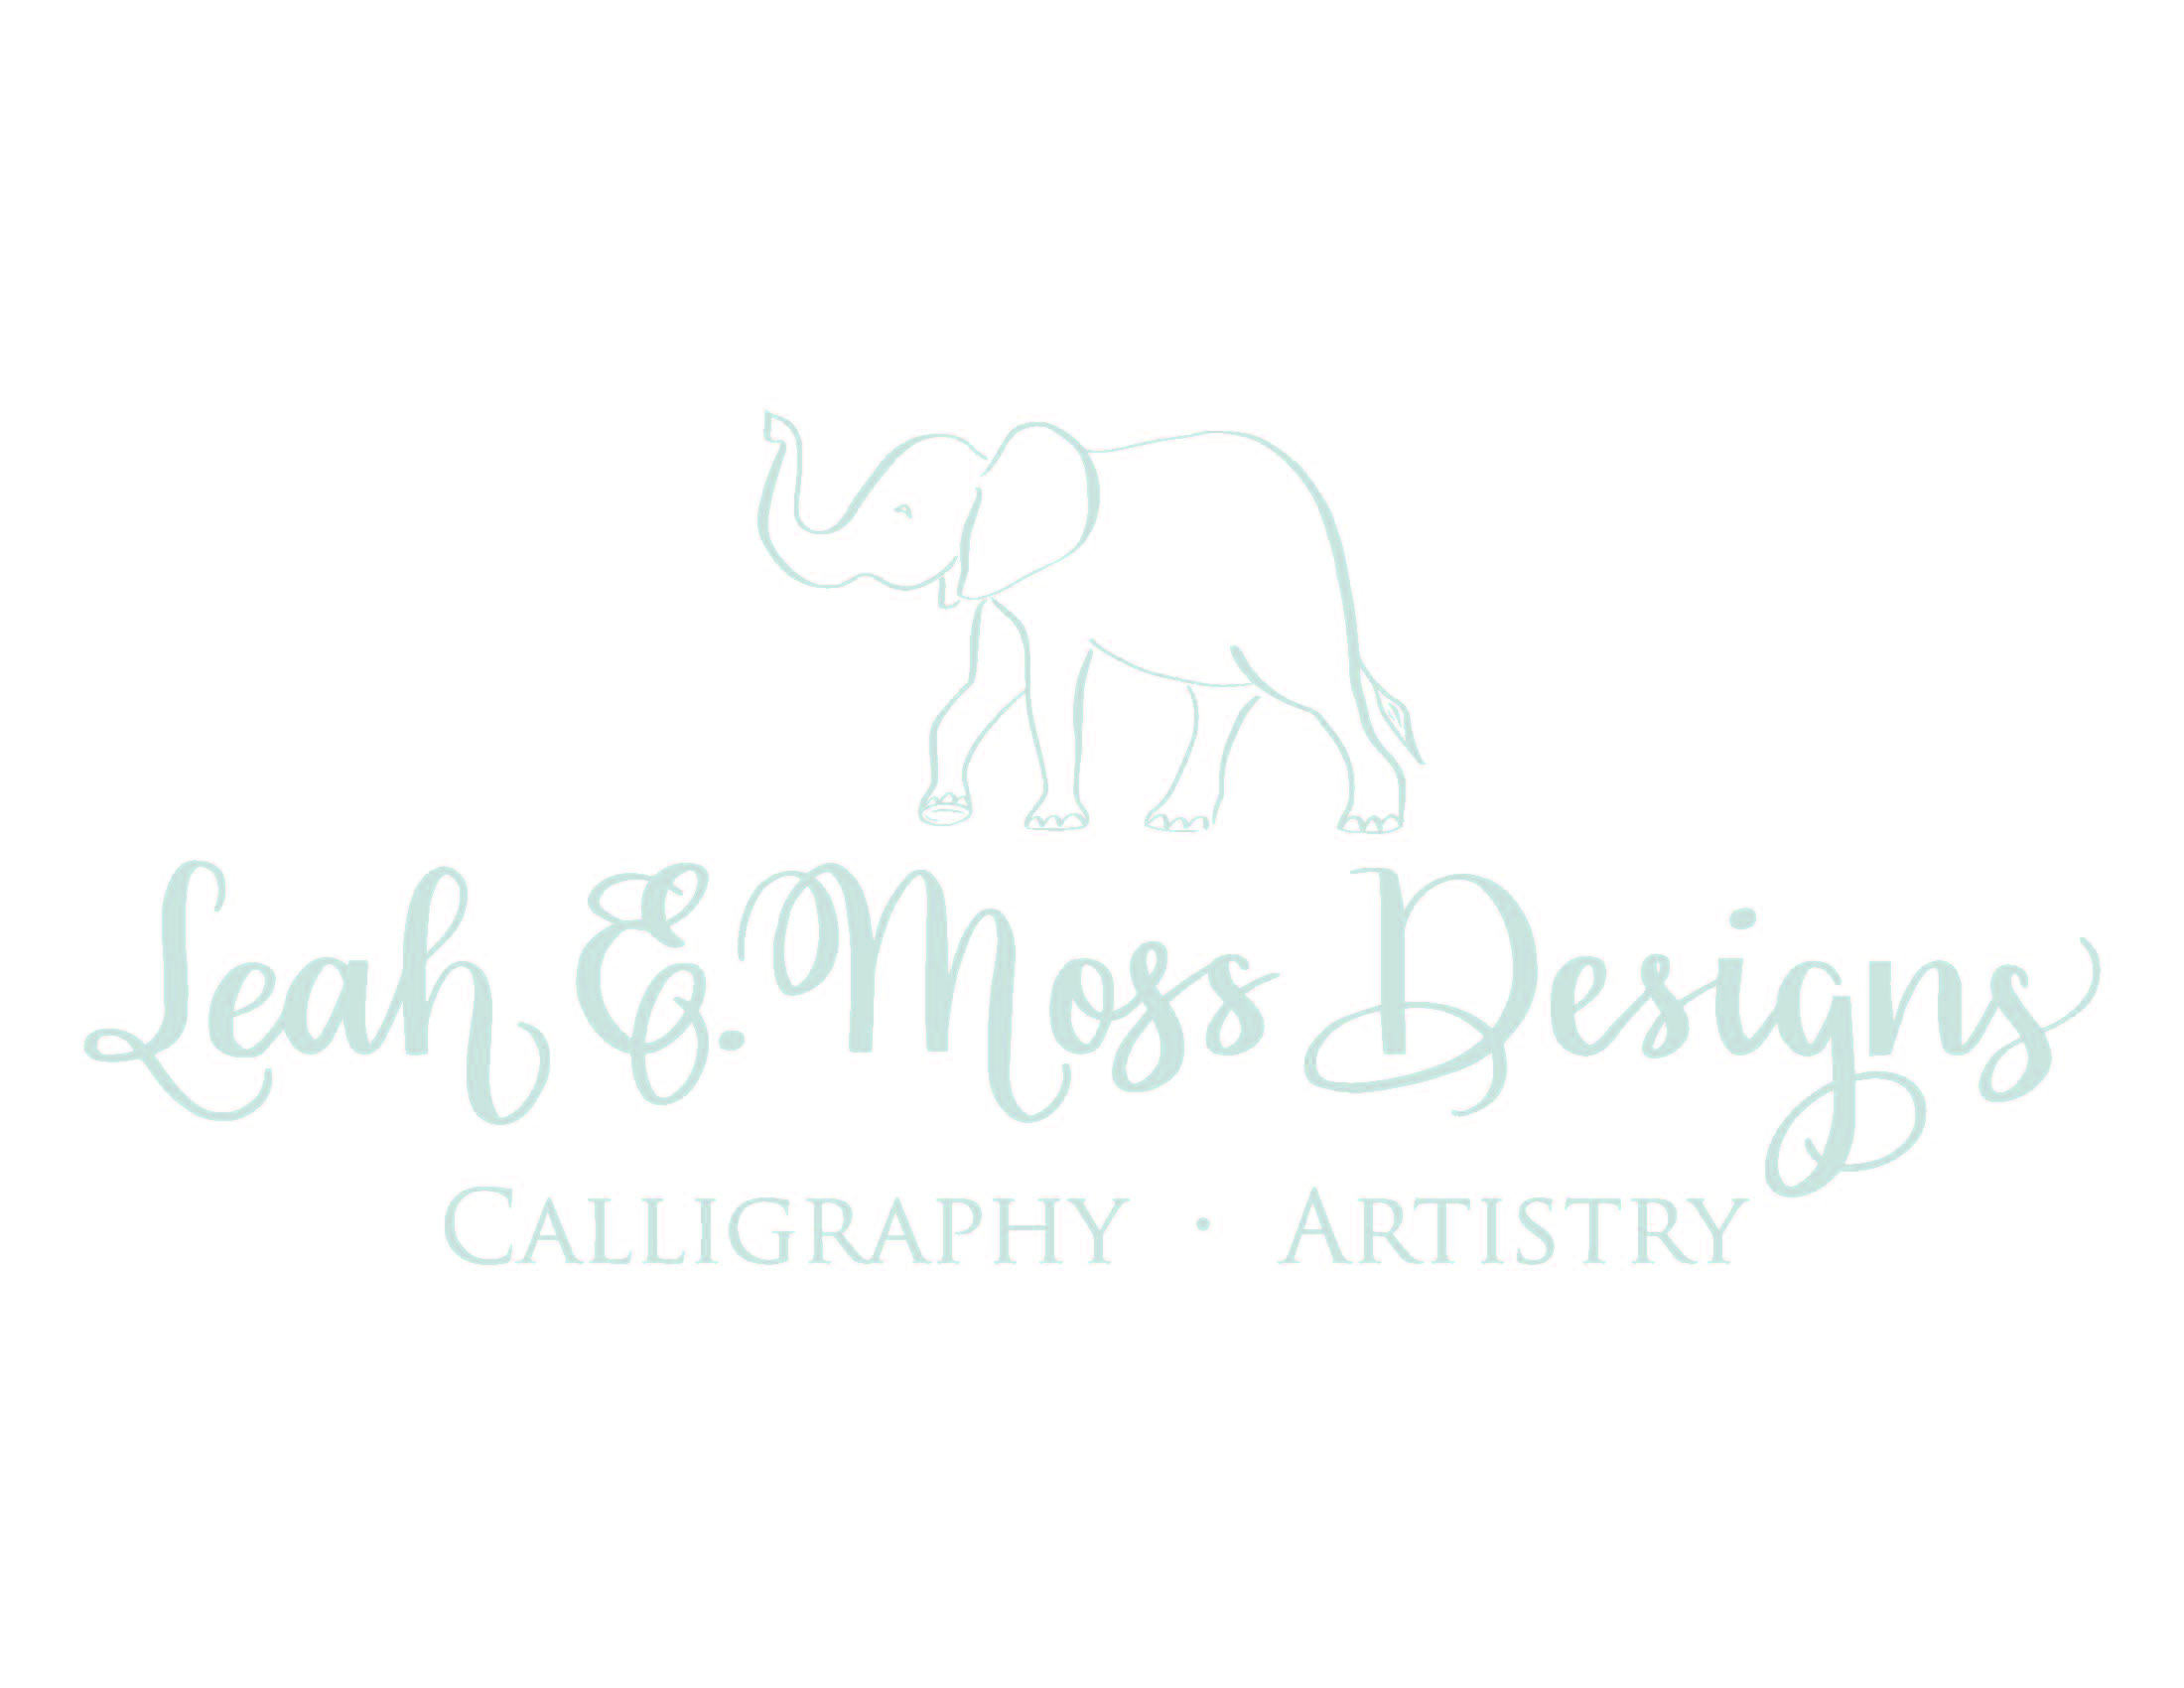 Leah E. Moss Designs, LLC.